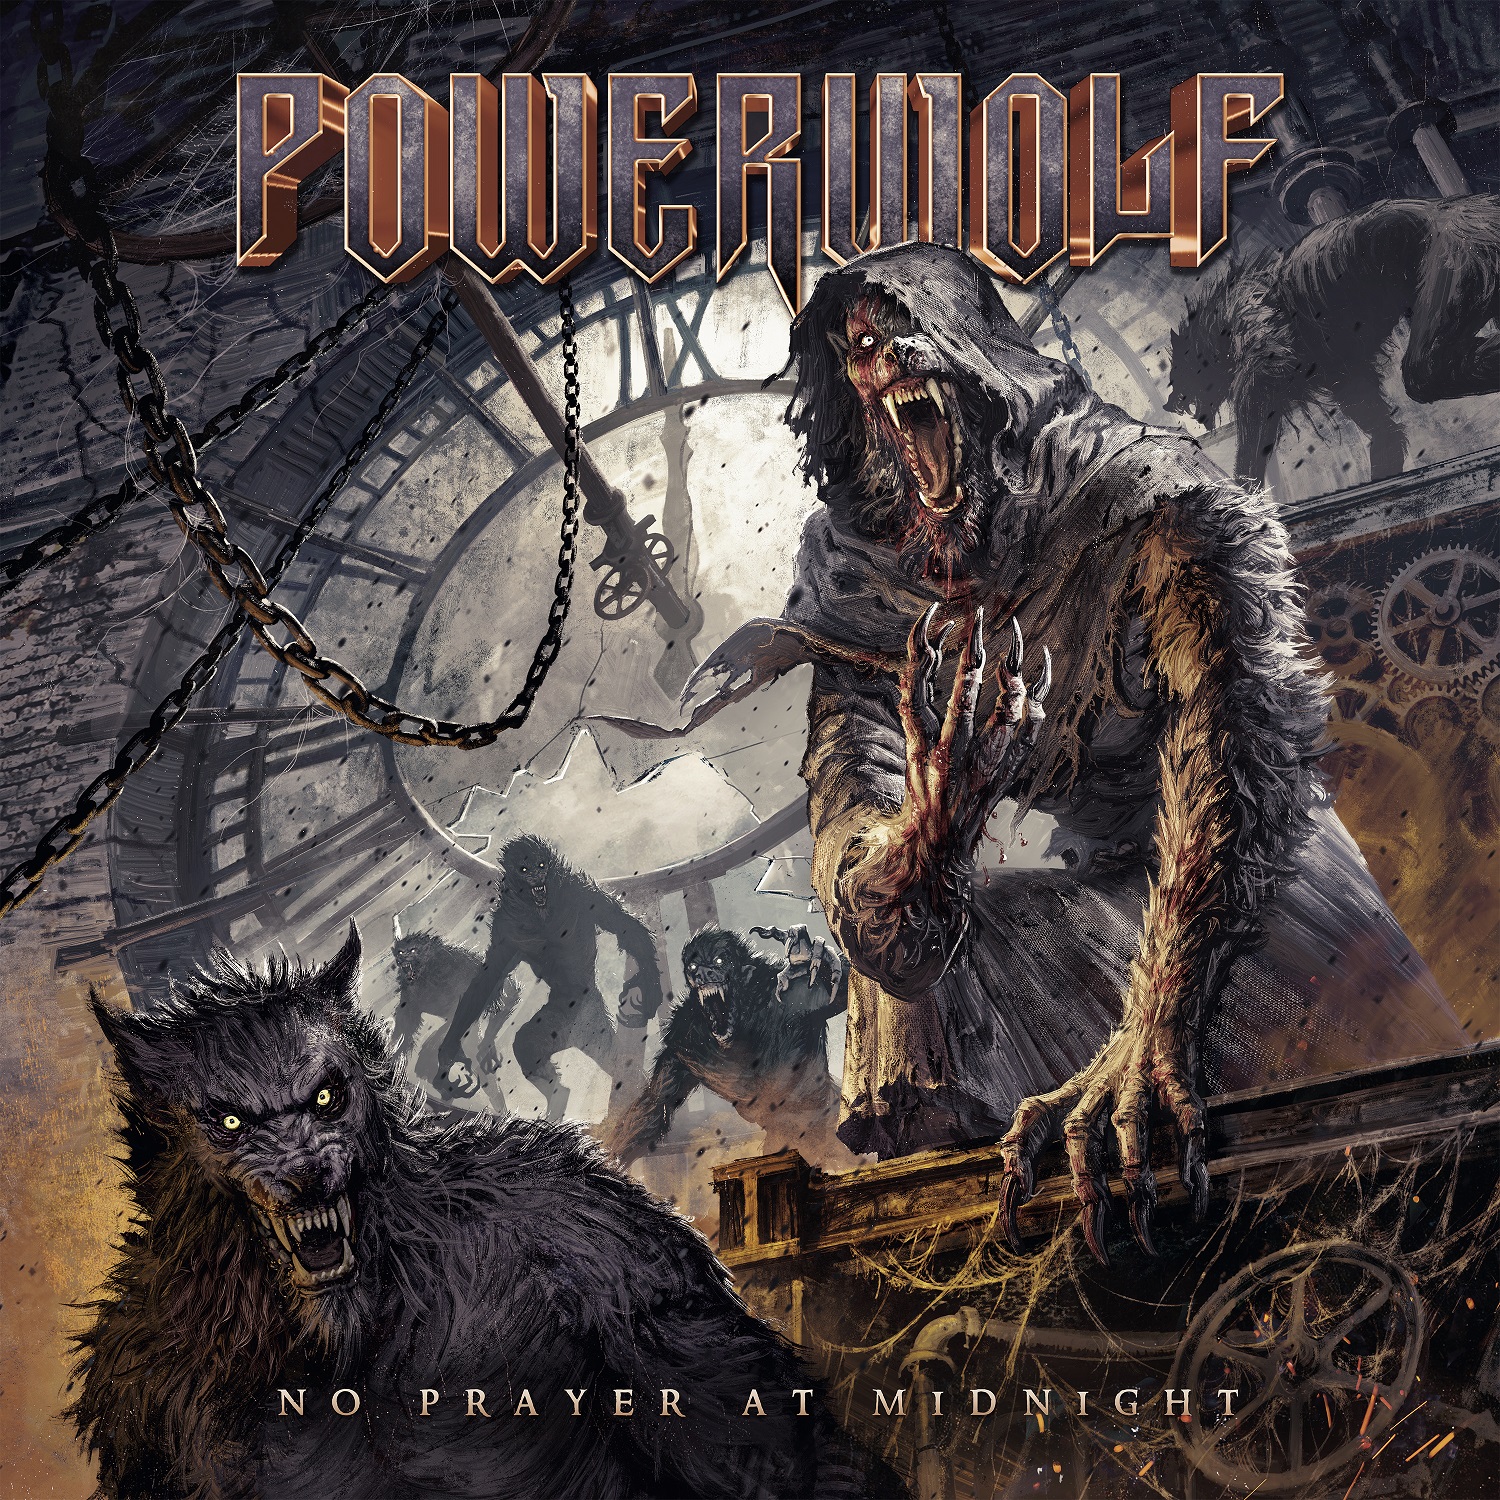 The German metal band Powerwolf is releasing a co-op board game